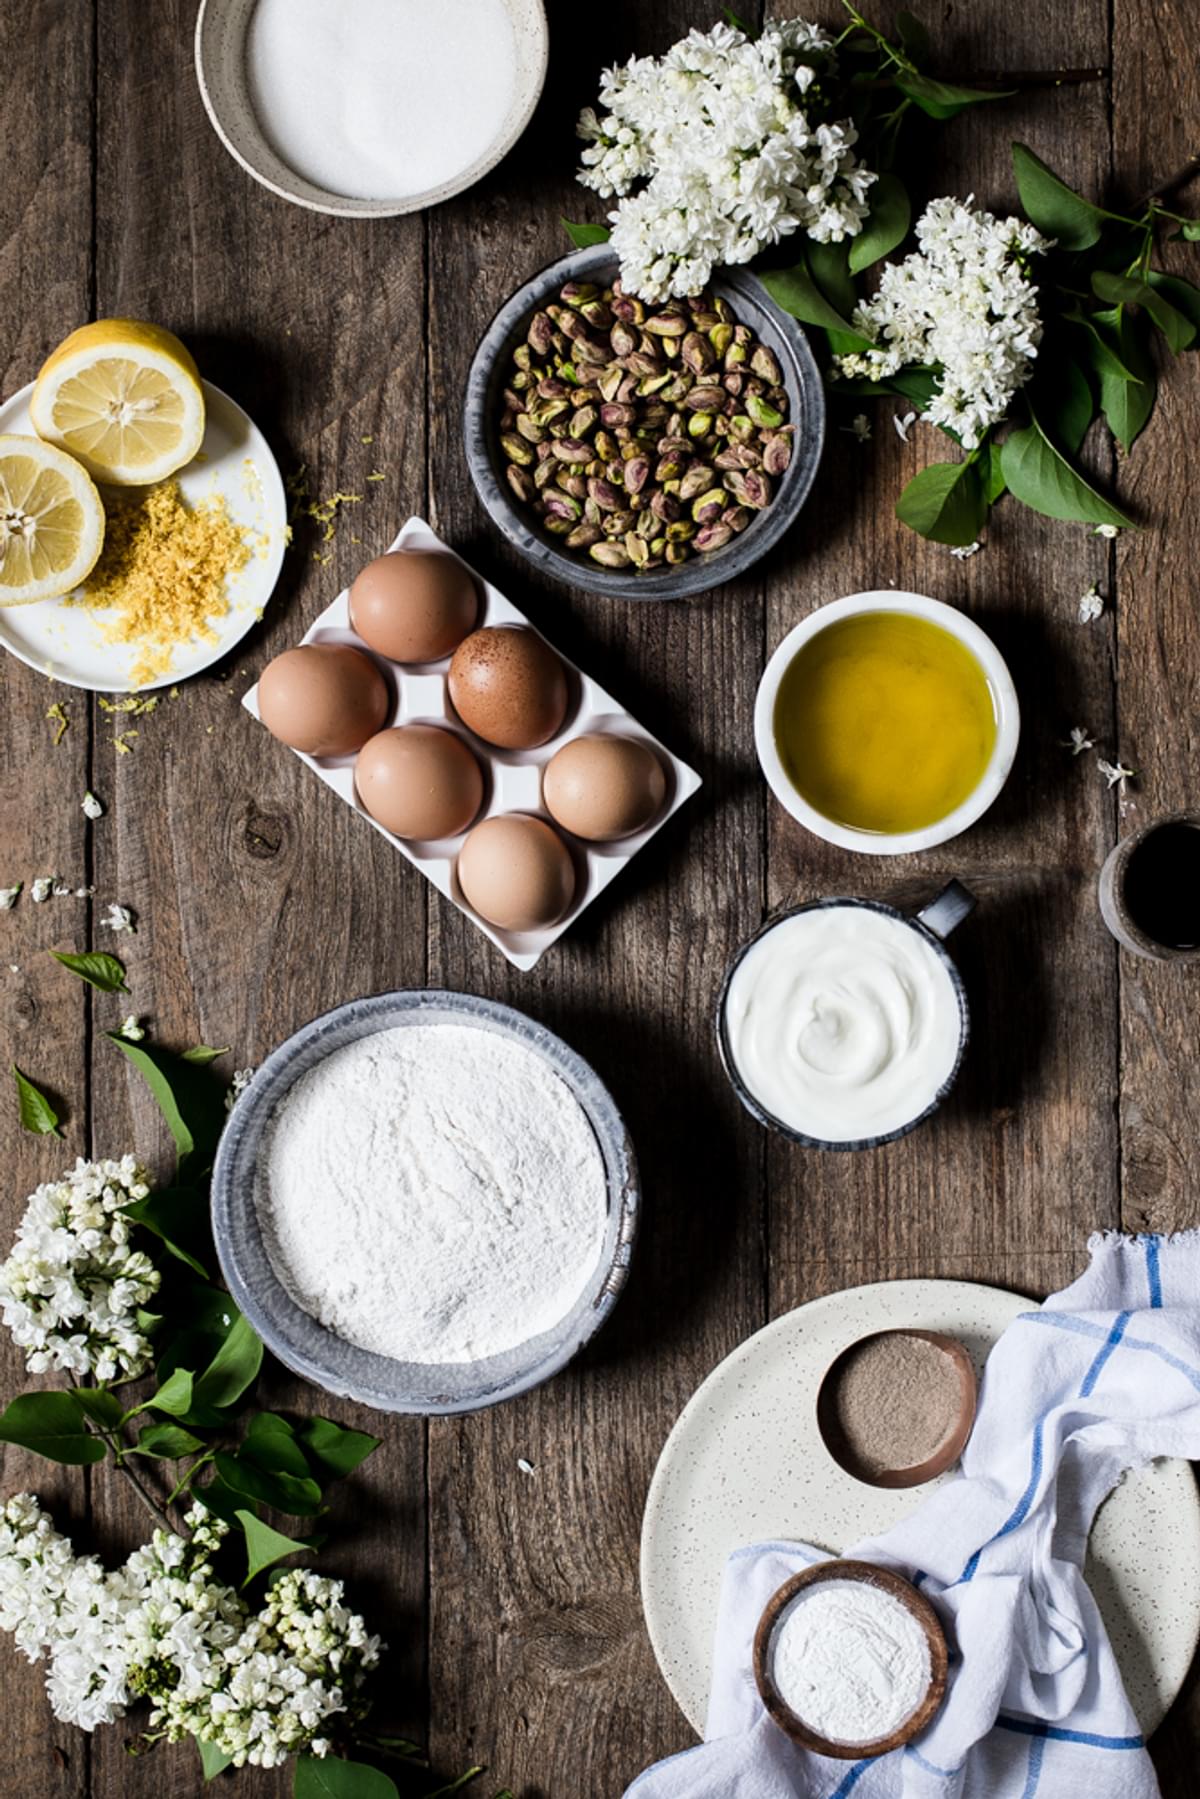 yogurt, flour, eggs, lemons, pistachios, salt, cardamon, olive oil in bowls on the table.